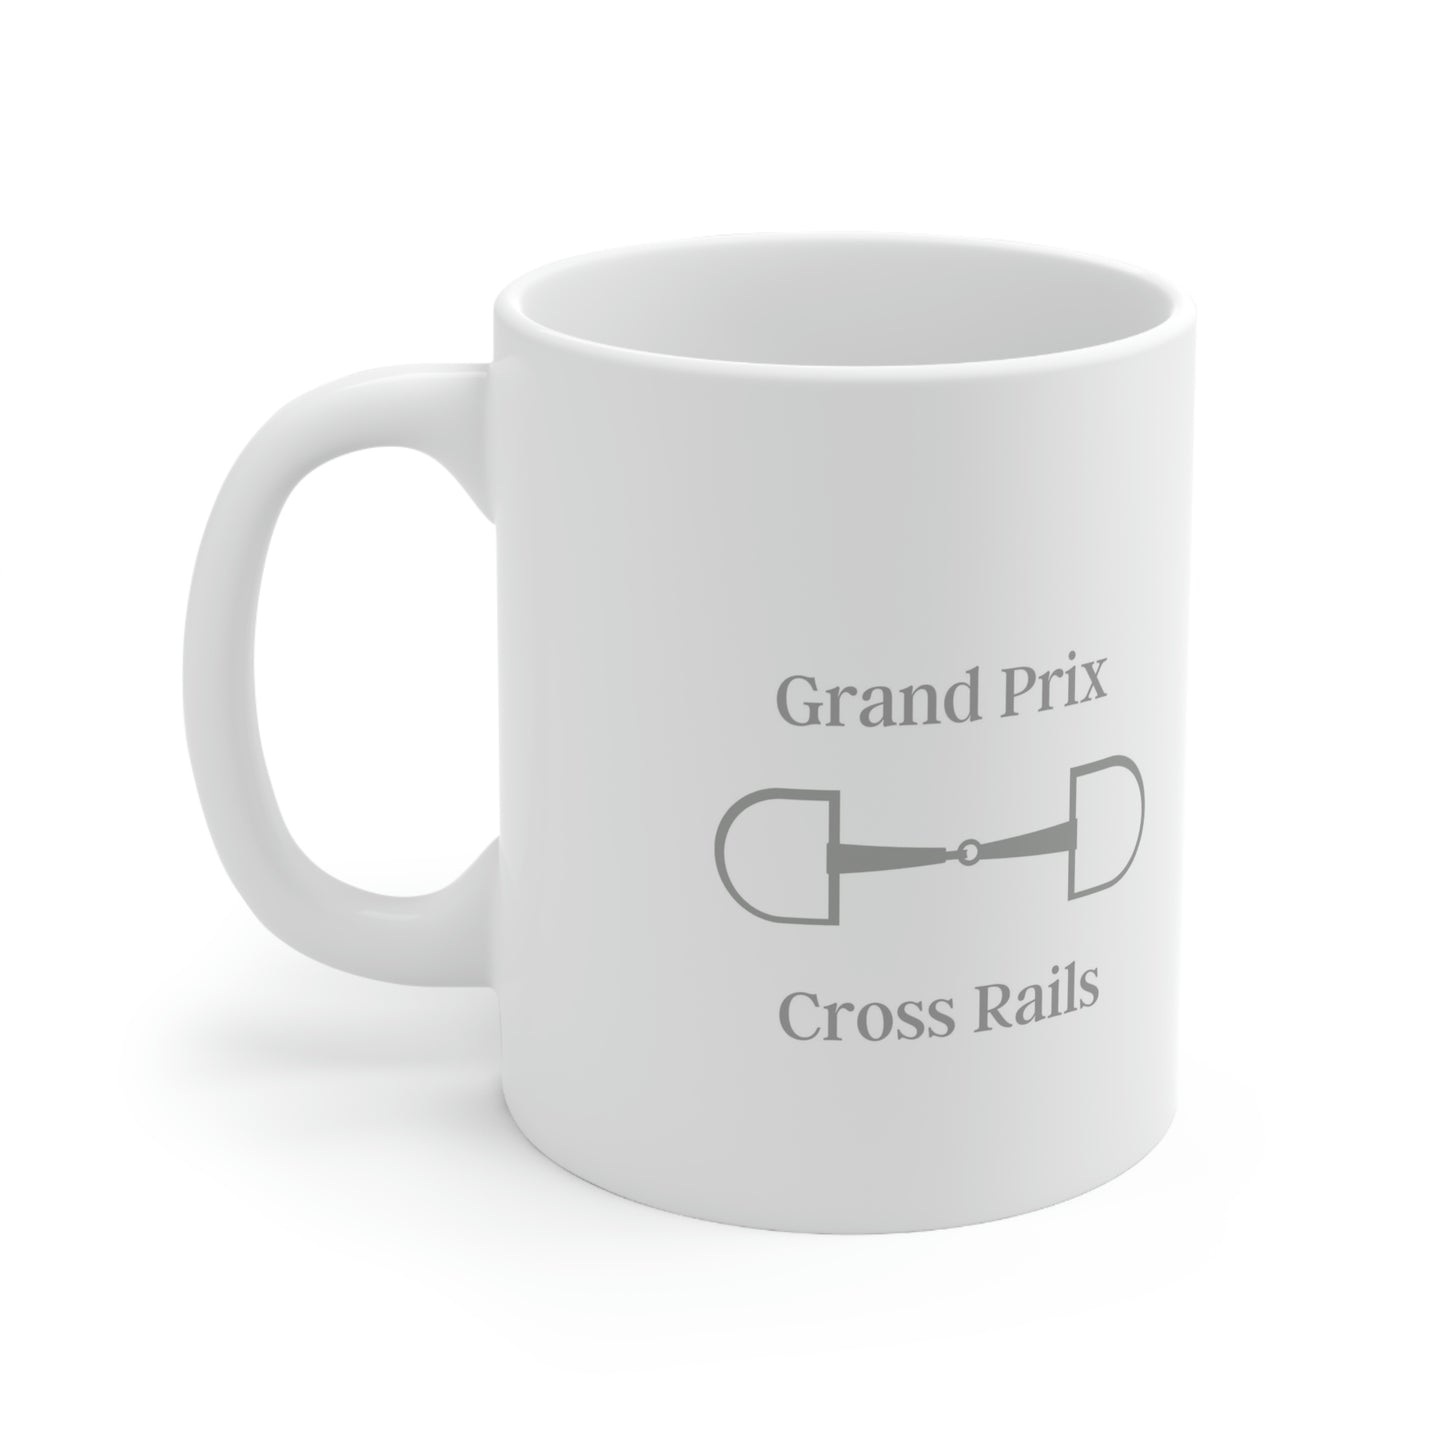 Grand Prix Cross Rails - Ceramic Mug 11oz